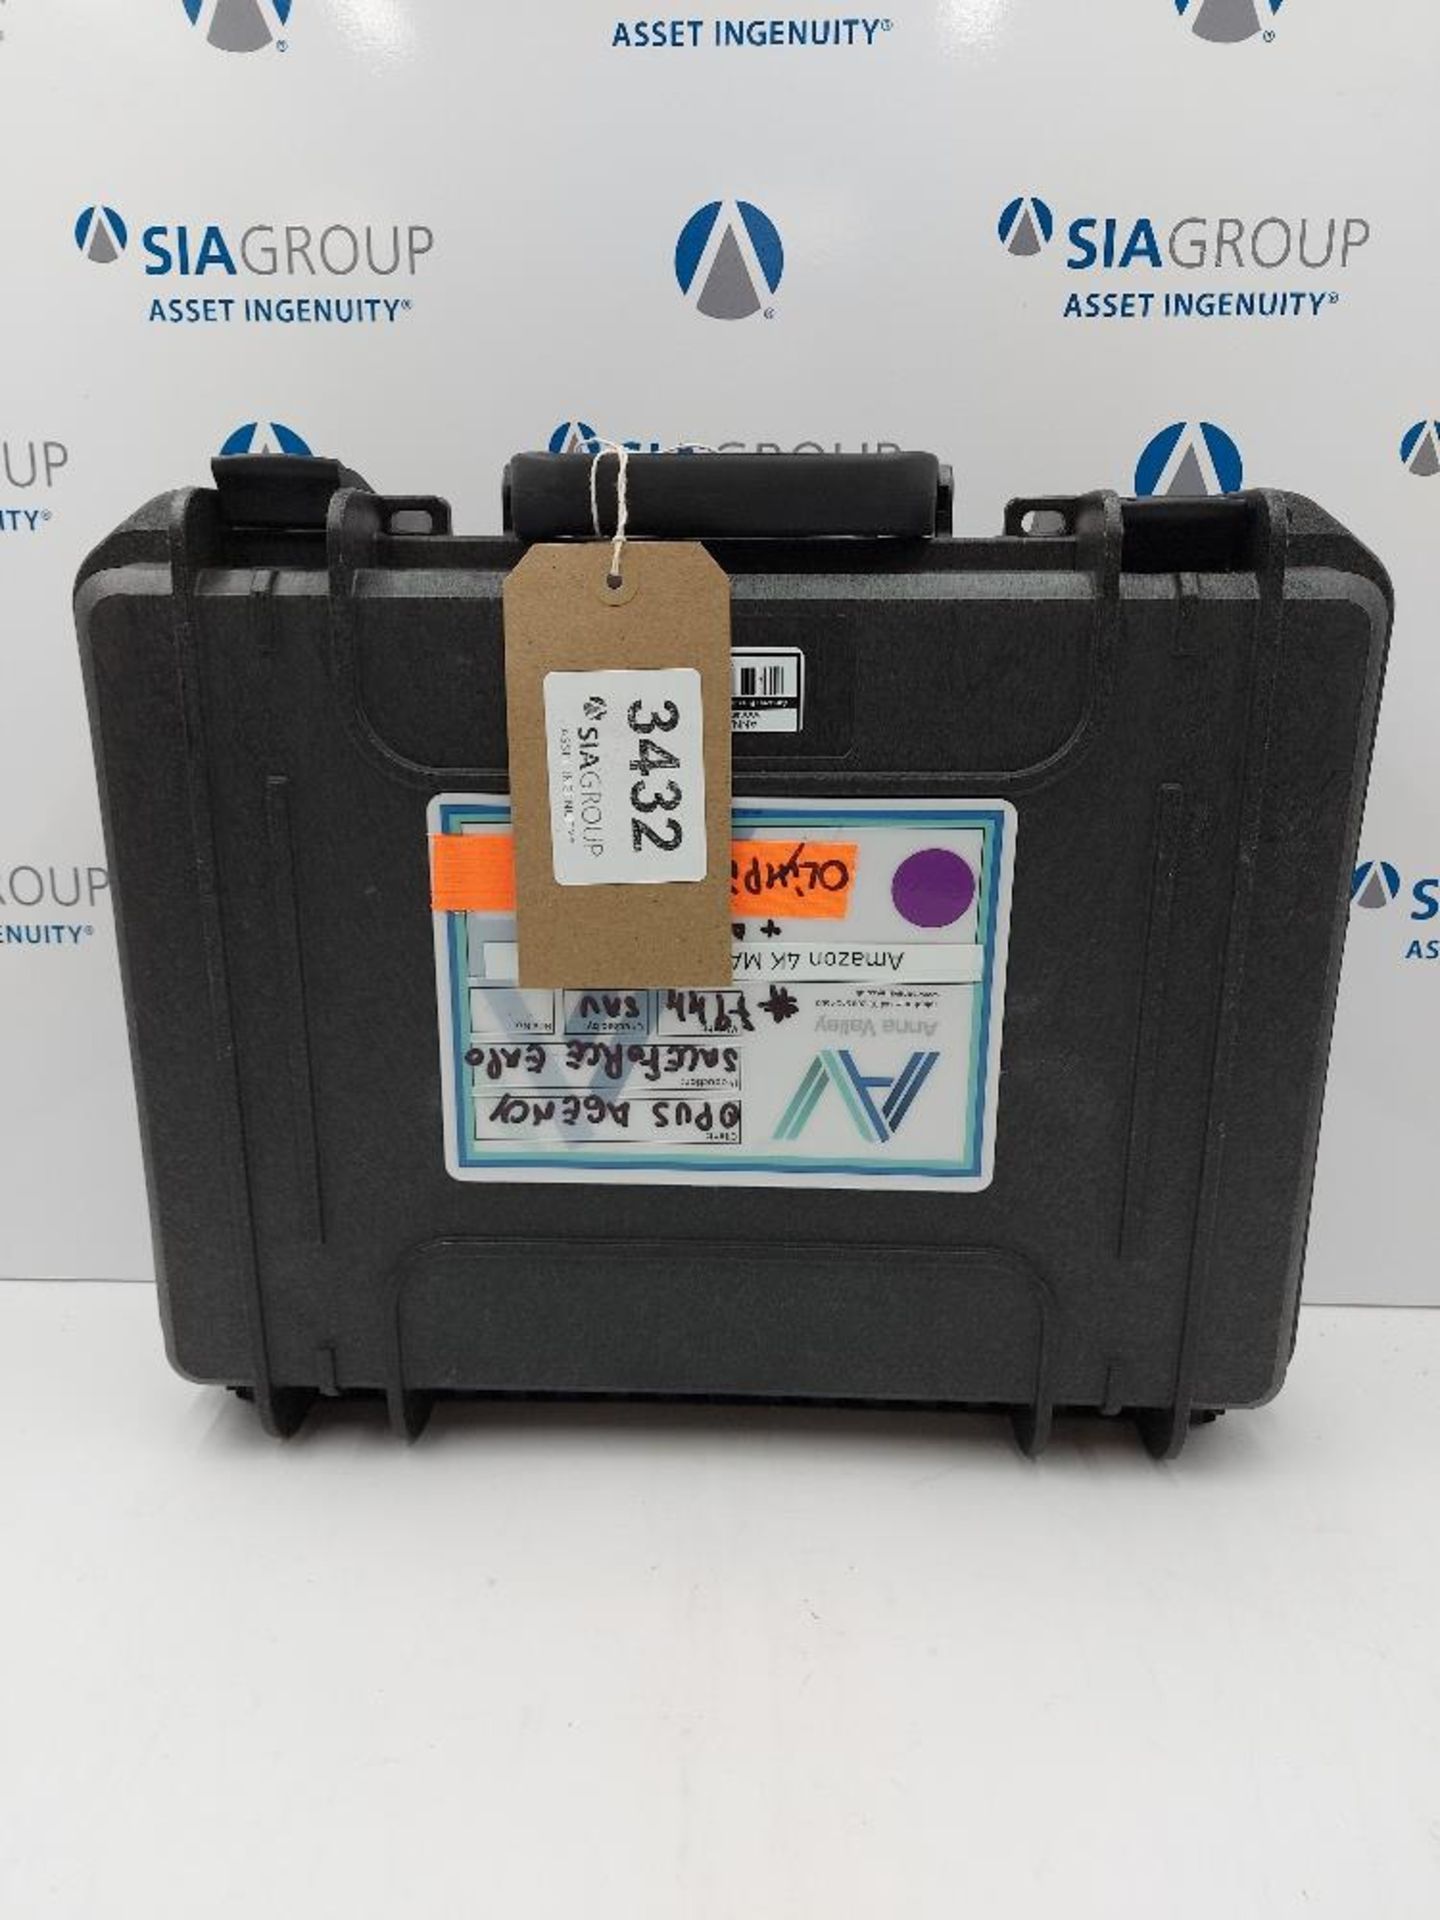 (2) Amazon 4k Max Fire Stick Kits with Peli Case - Image 2 of 2